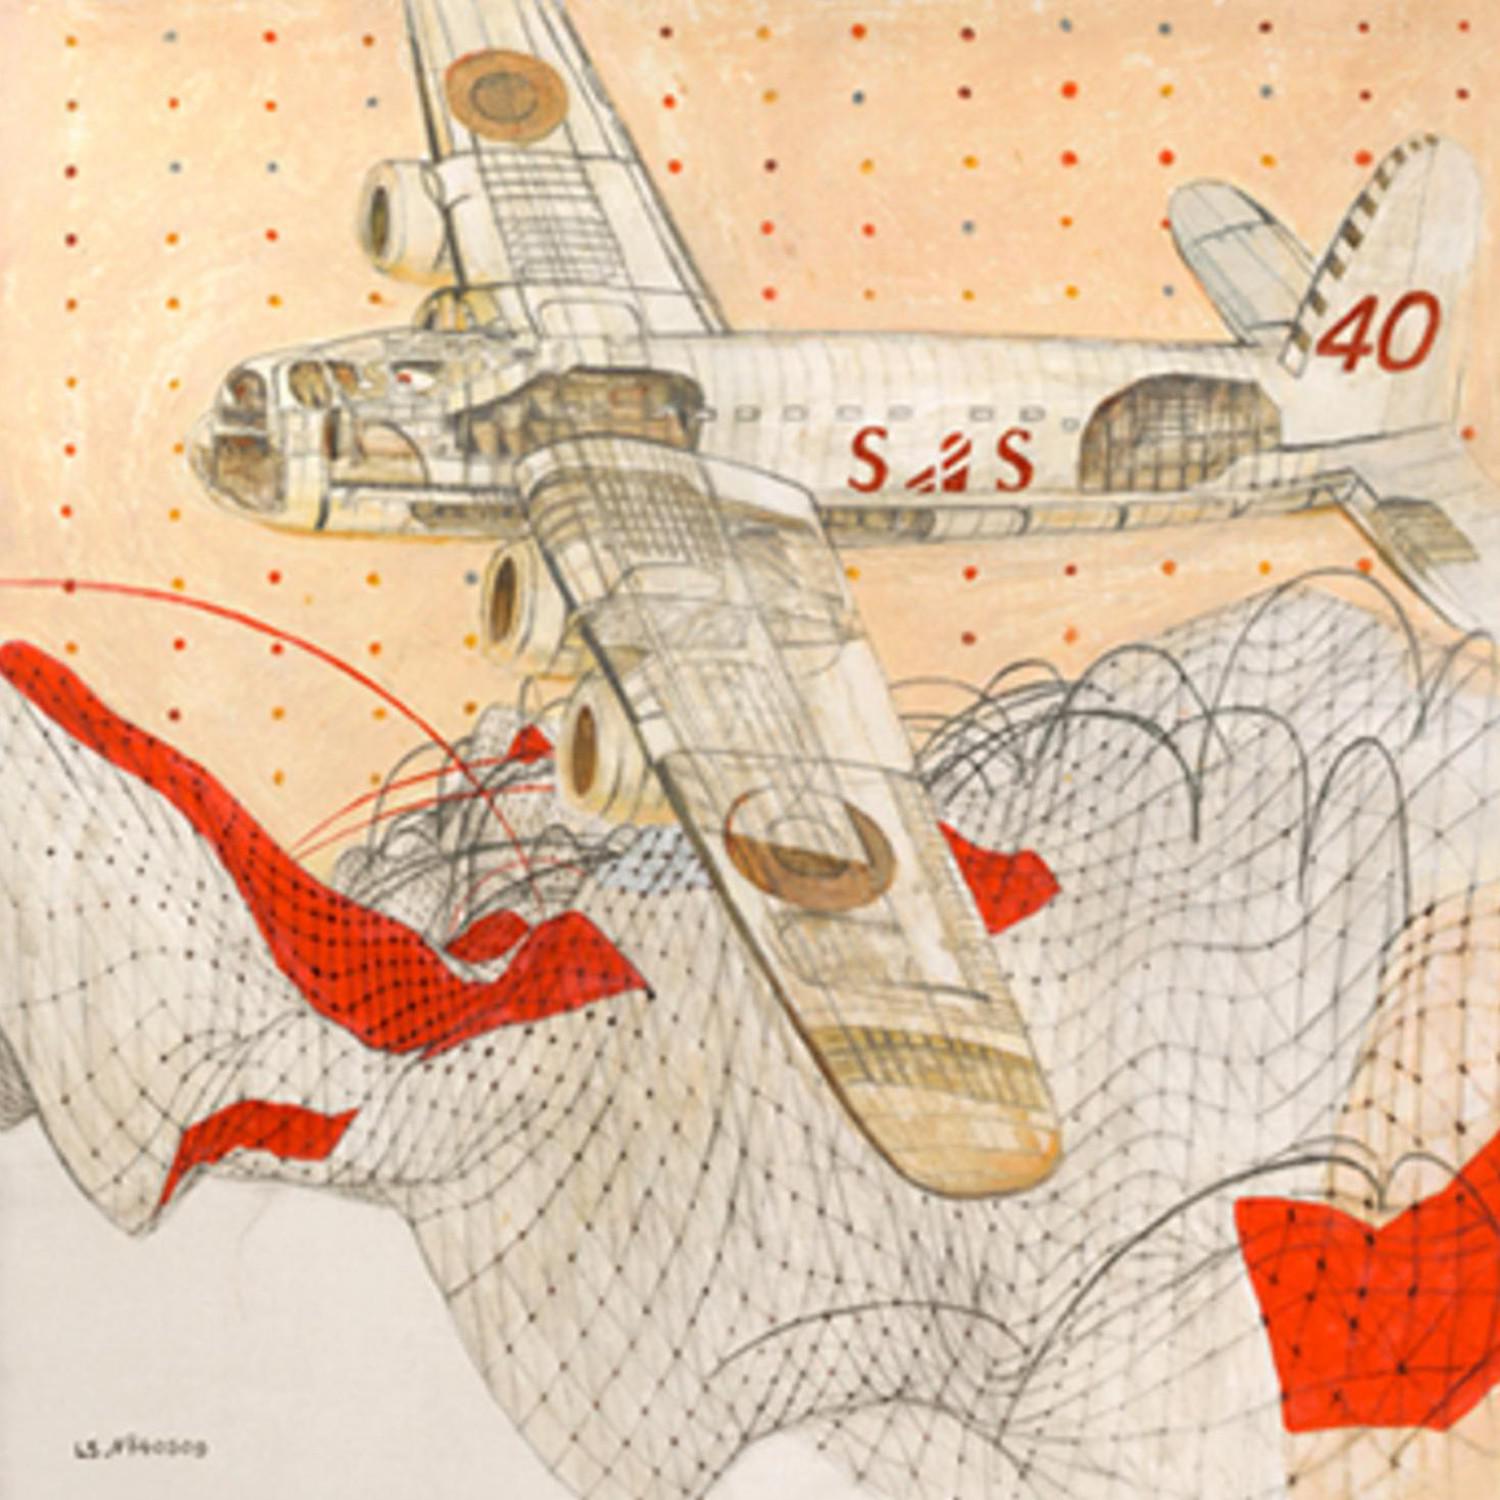 New Coordinates-s (Песни кузнечиков). Сергей Колеватых. 2009, giclee, 50x50